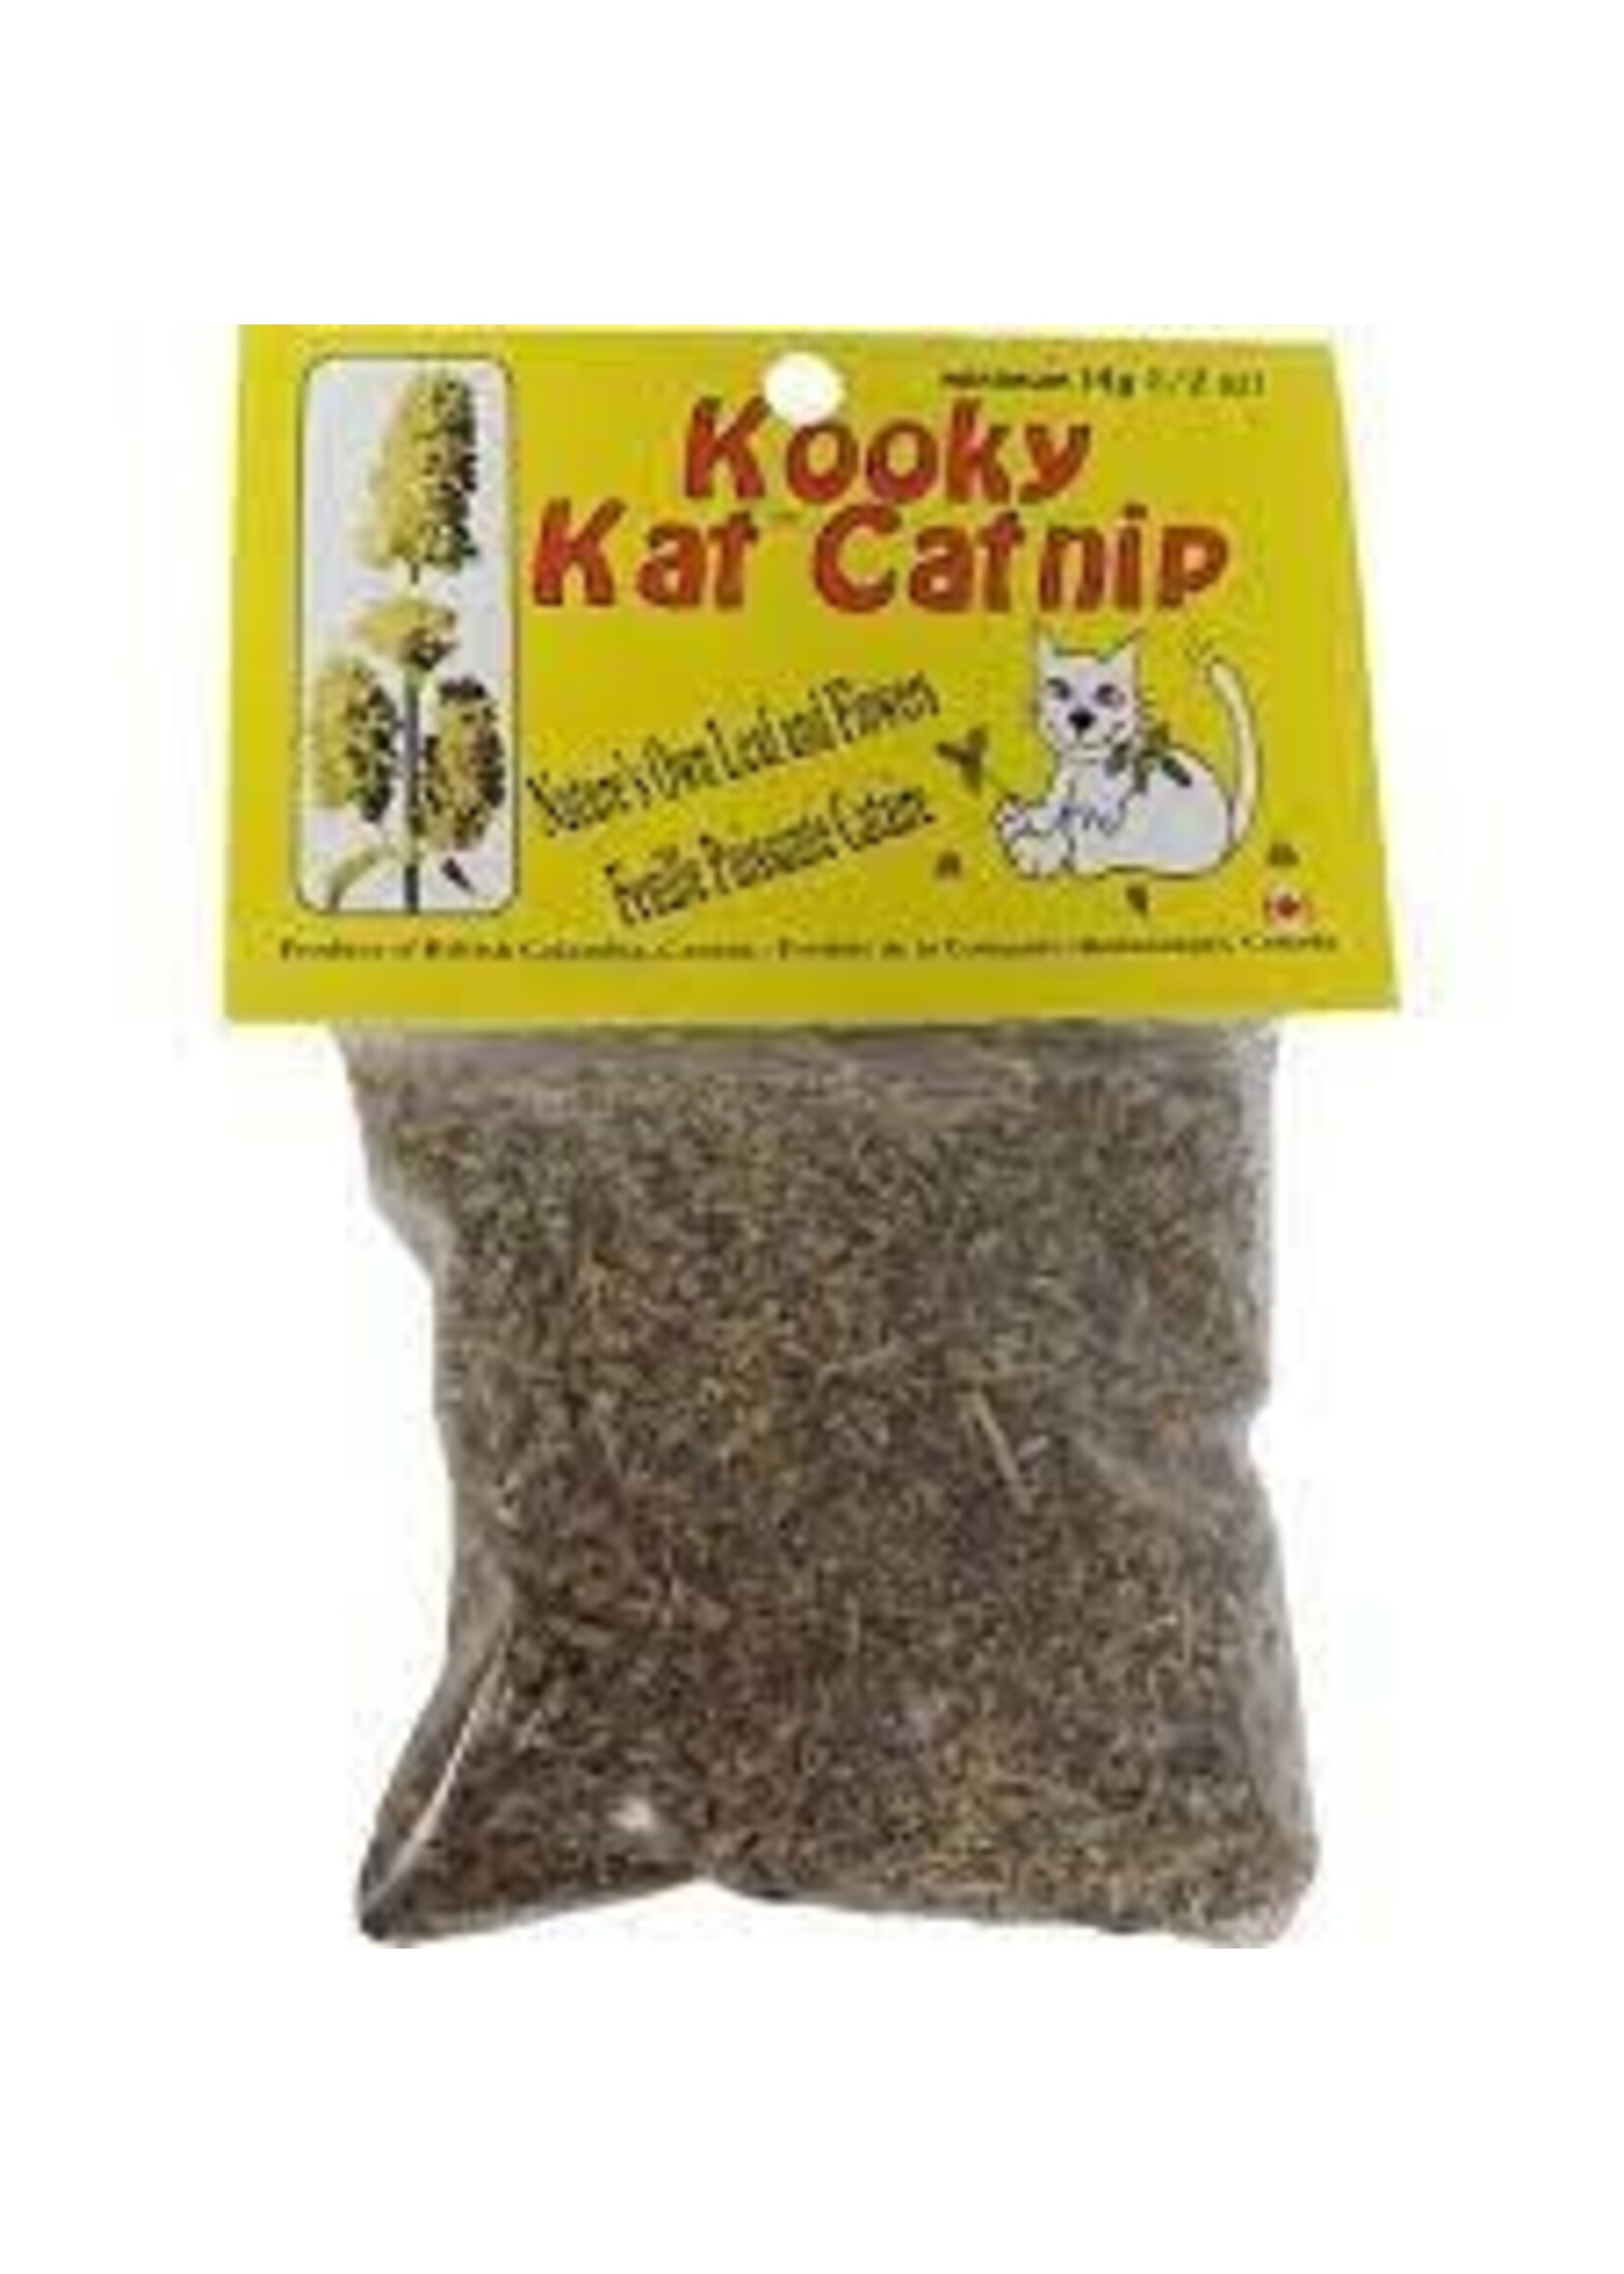 Kooky Kat Catnip Kooky Kat Catnip - Leaf & Flower Bag 14g